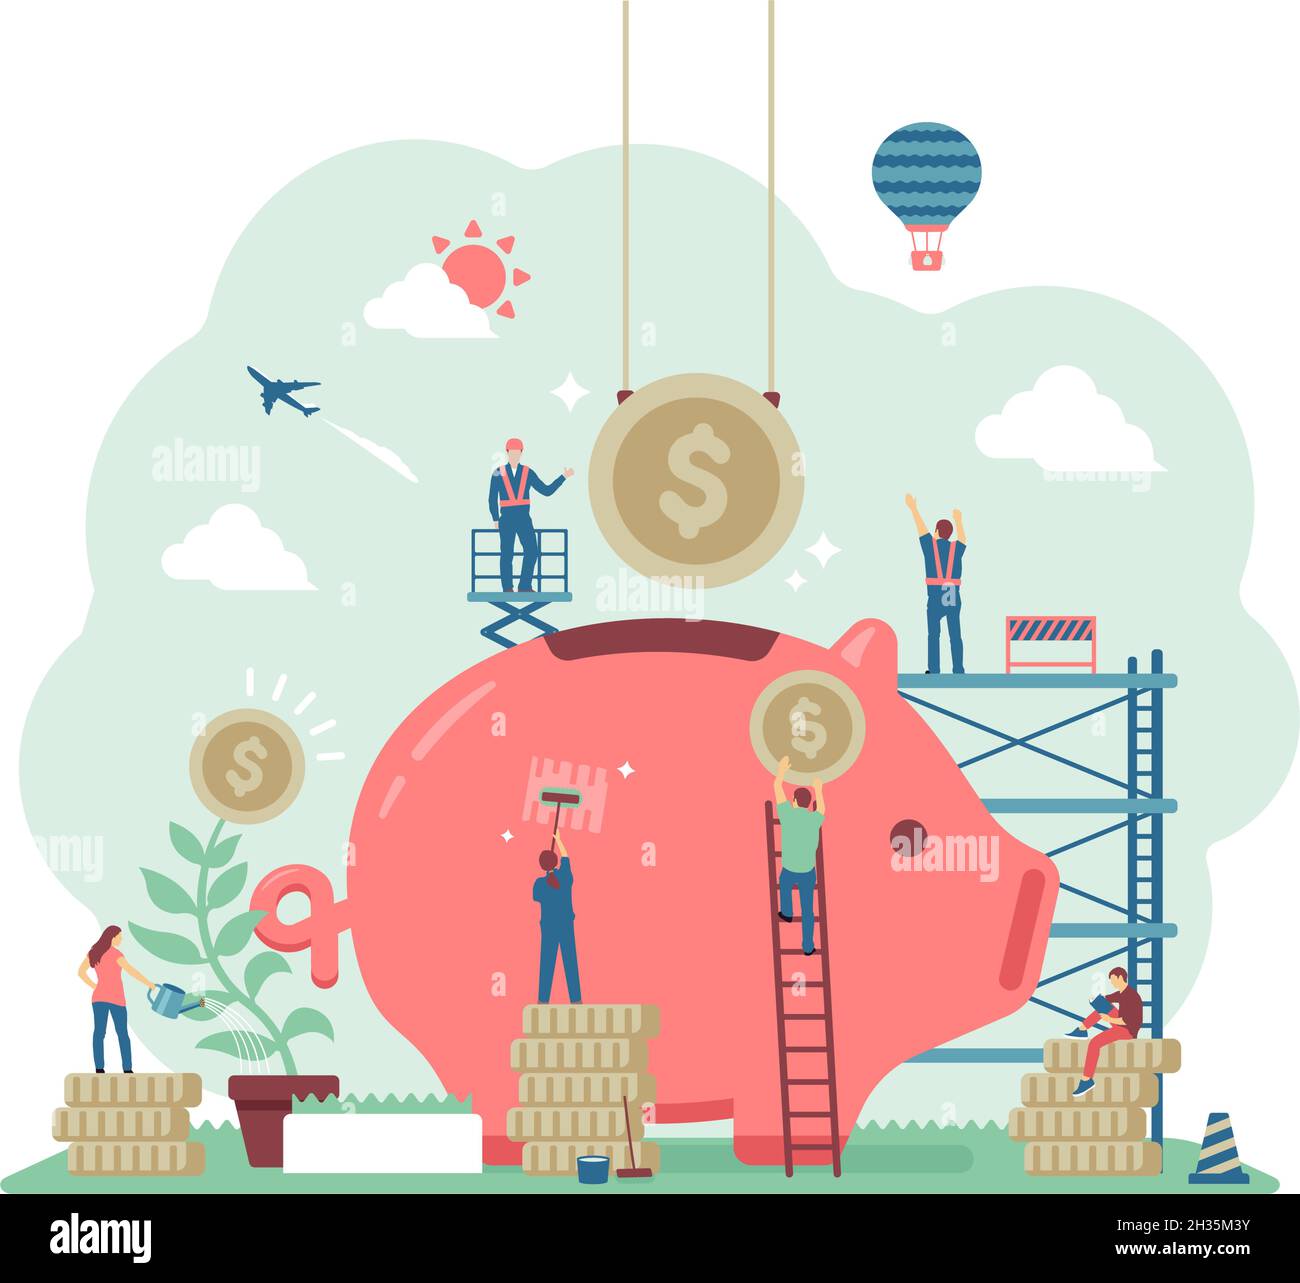 Saving money concept vector illustration Stock Vector